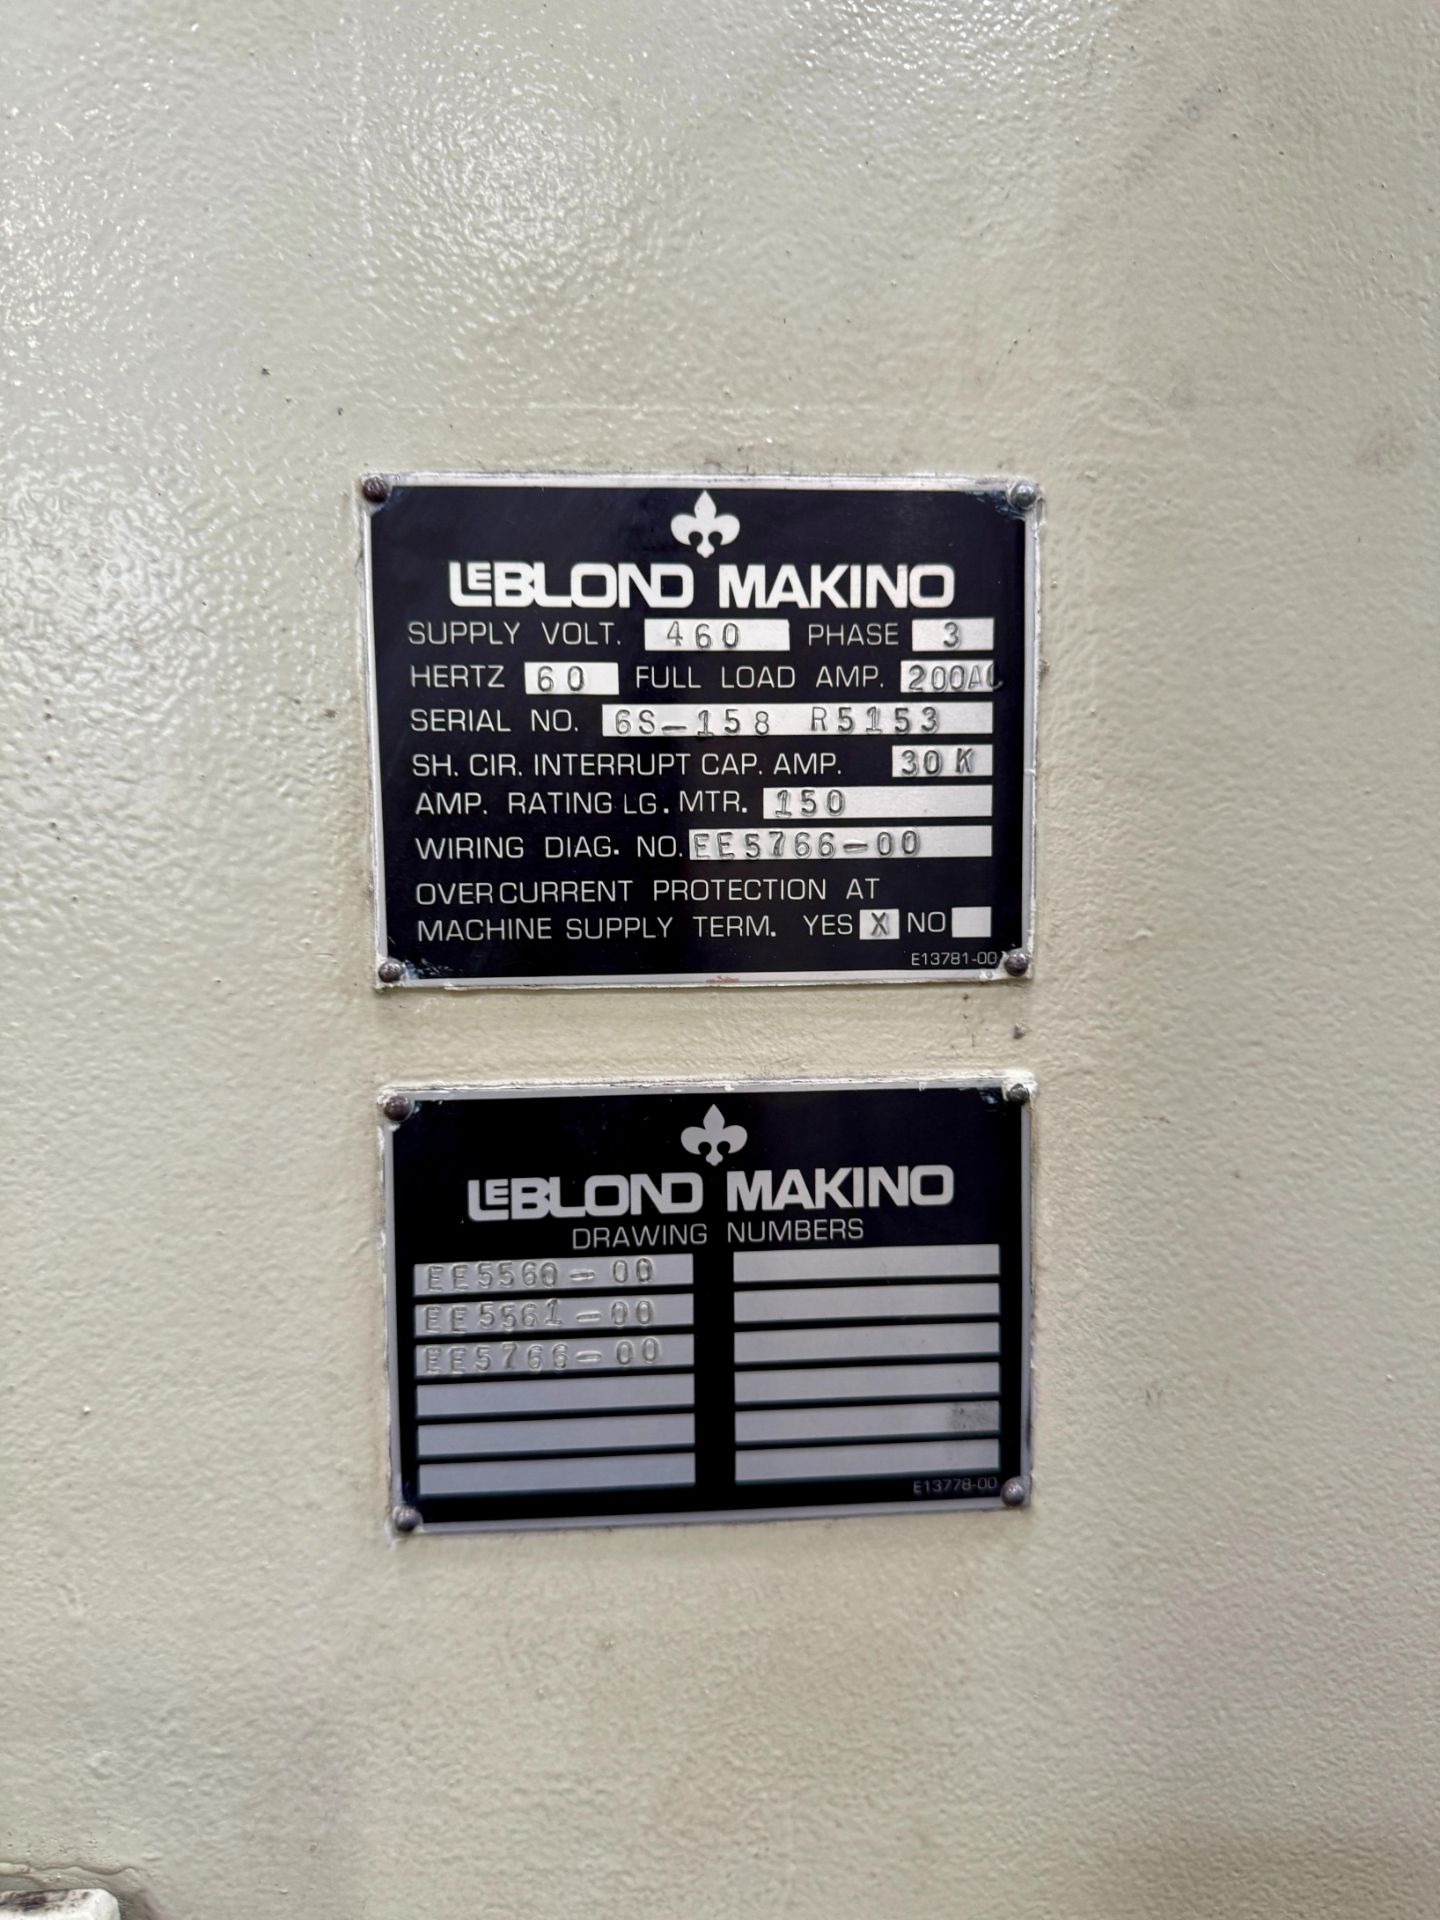 LEBLOND MAKINO BARON-60 TURNING CENTER, GE FANUC SERIES 21i-T CONTROL, 24" 3-JAW HYDRAULIC CHUCK, - Image 14 of 21